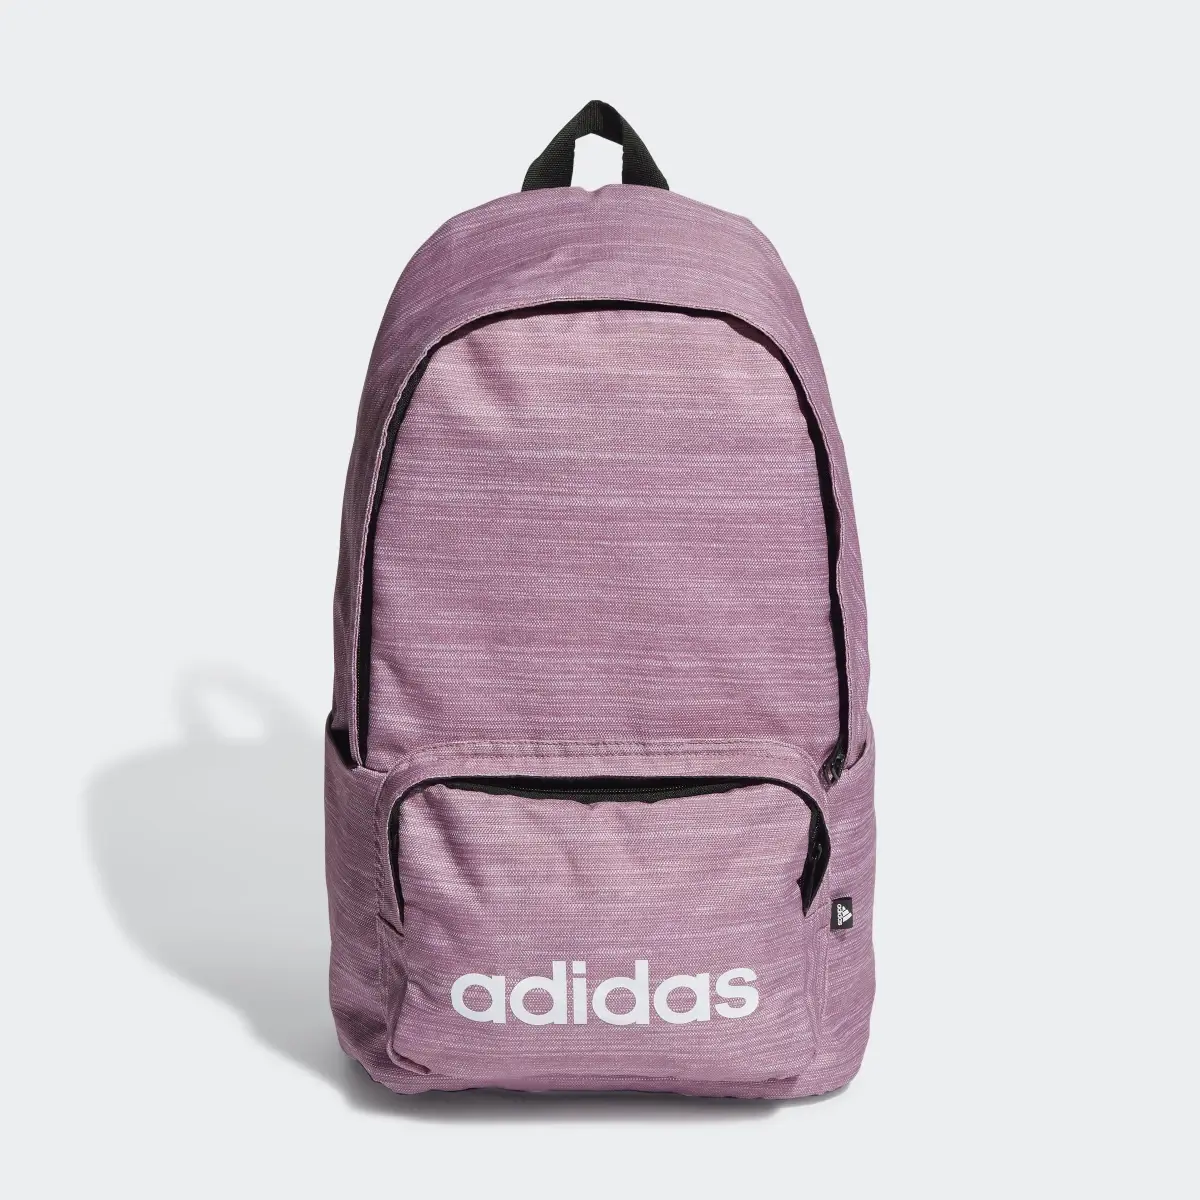 Adidas Classic Attitude Backpack. 2